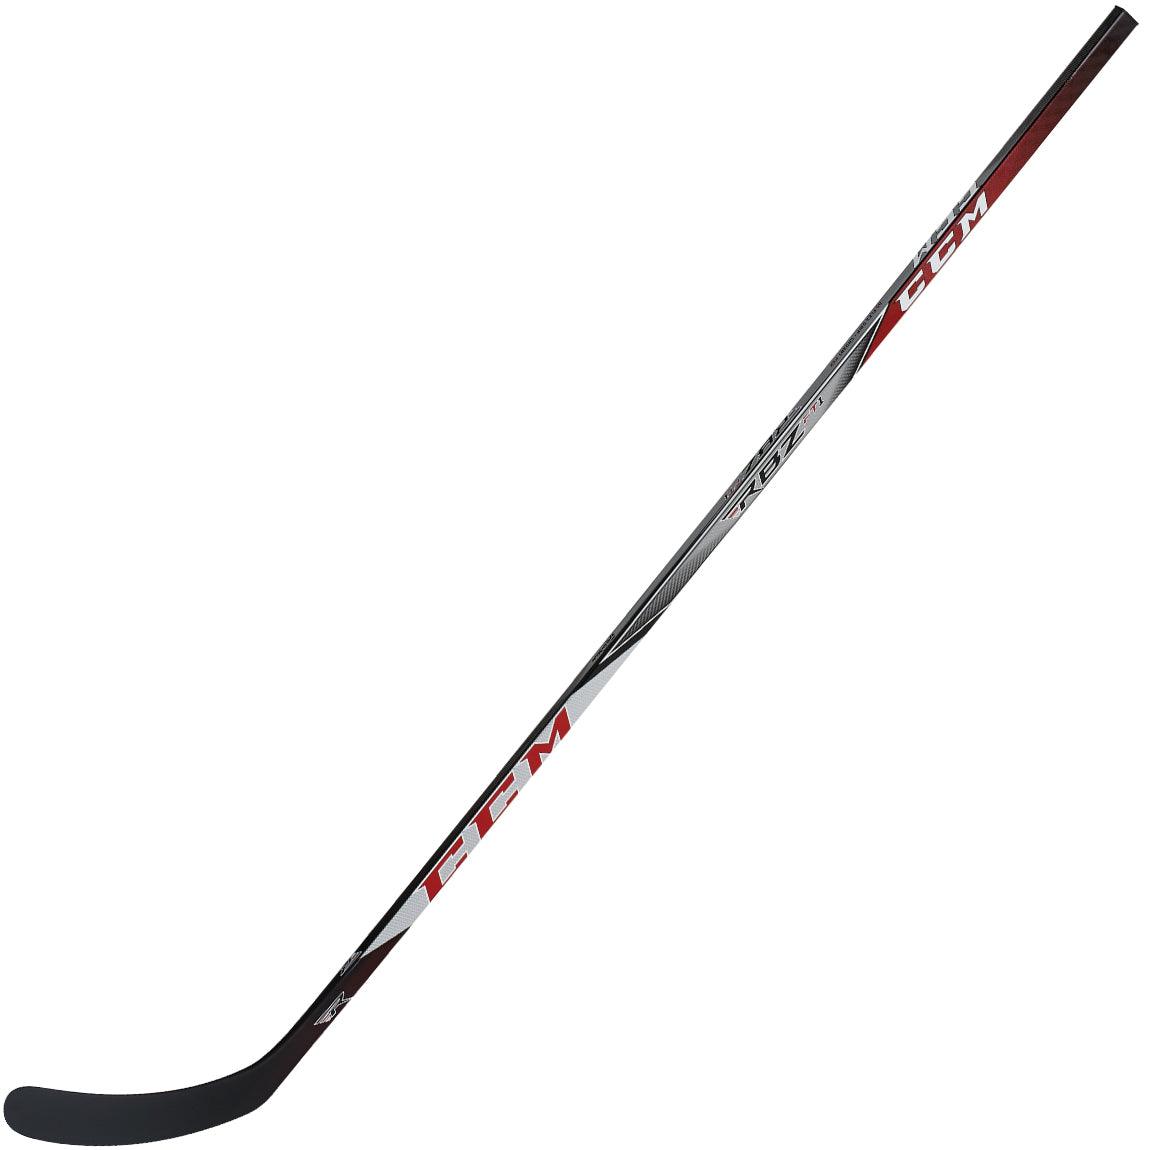 RBZ FT1 Hockey Stick - Intermediate - Sports Excellence